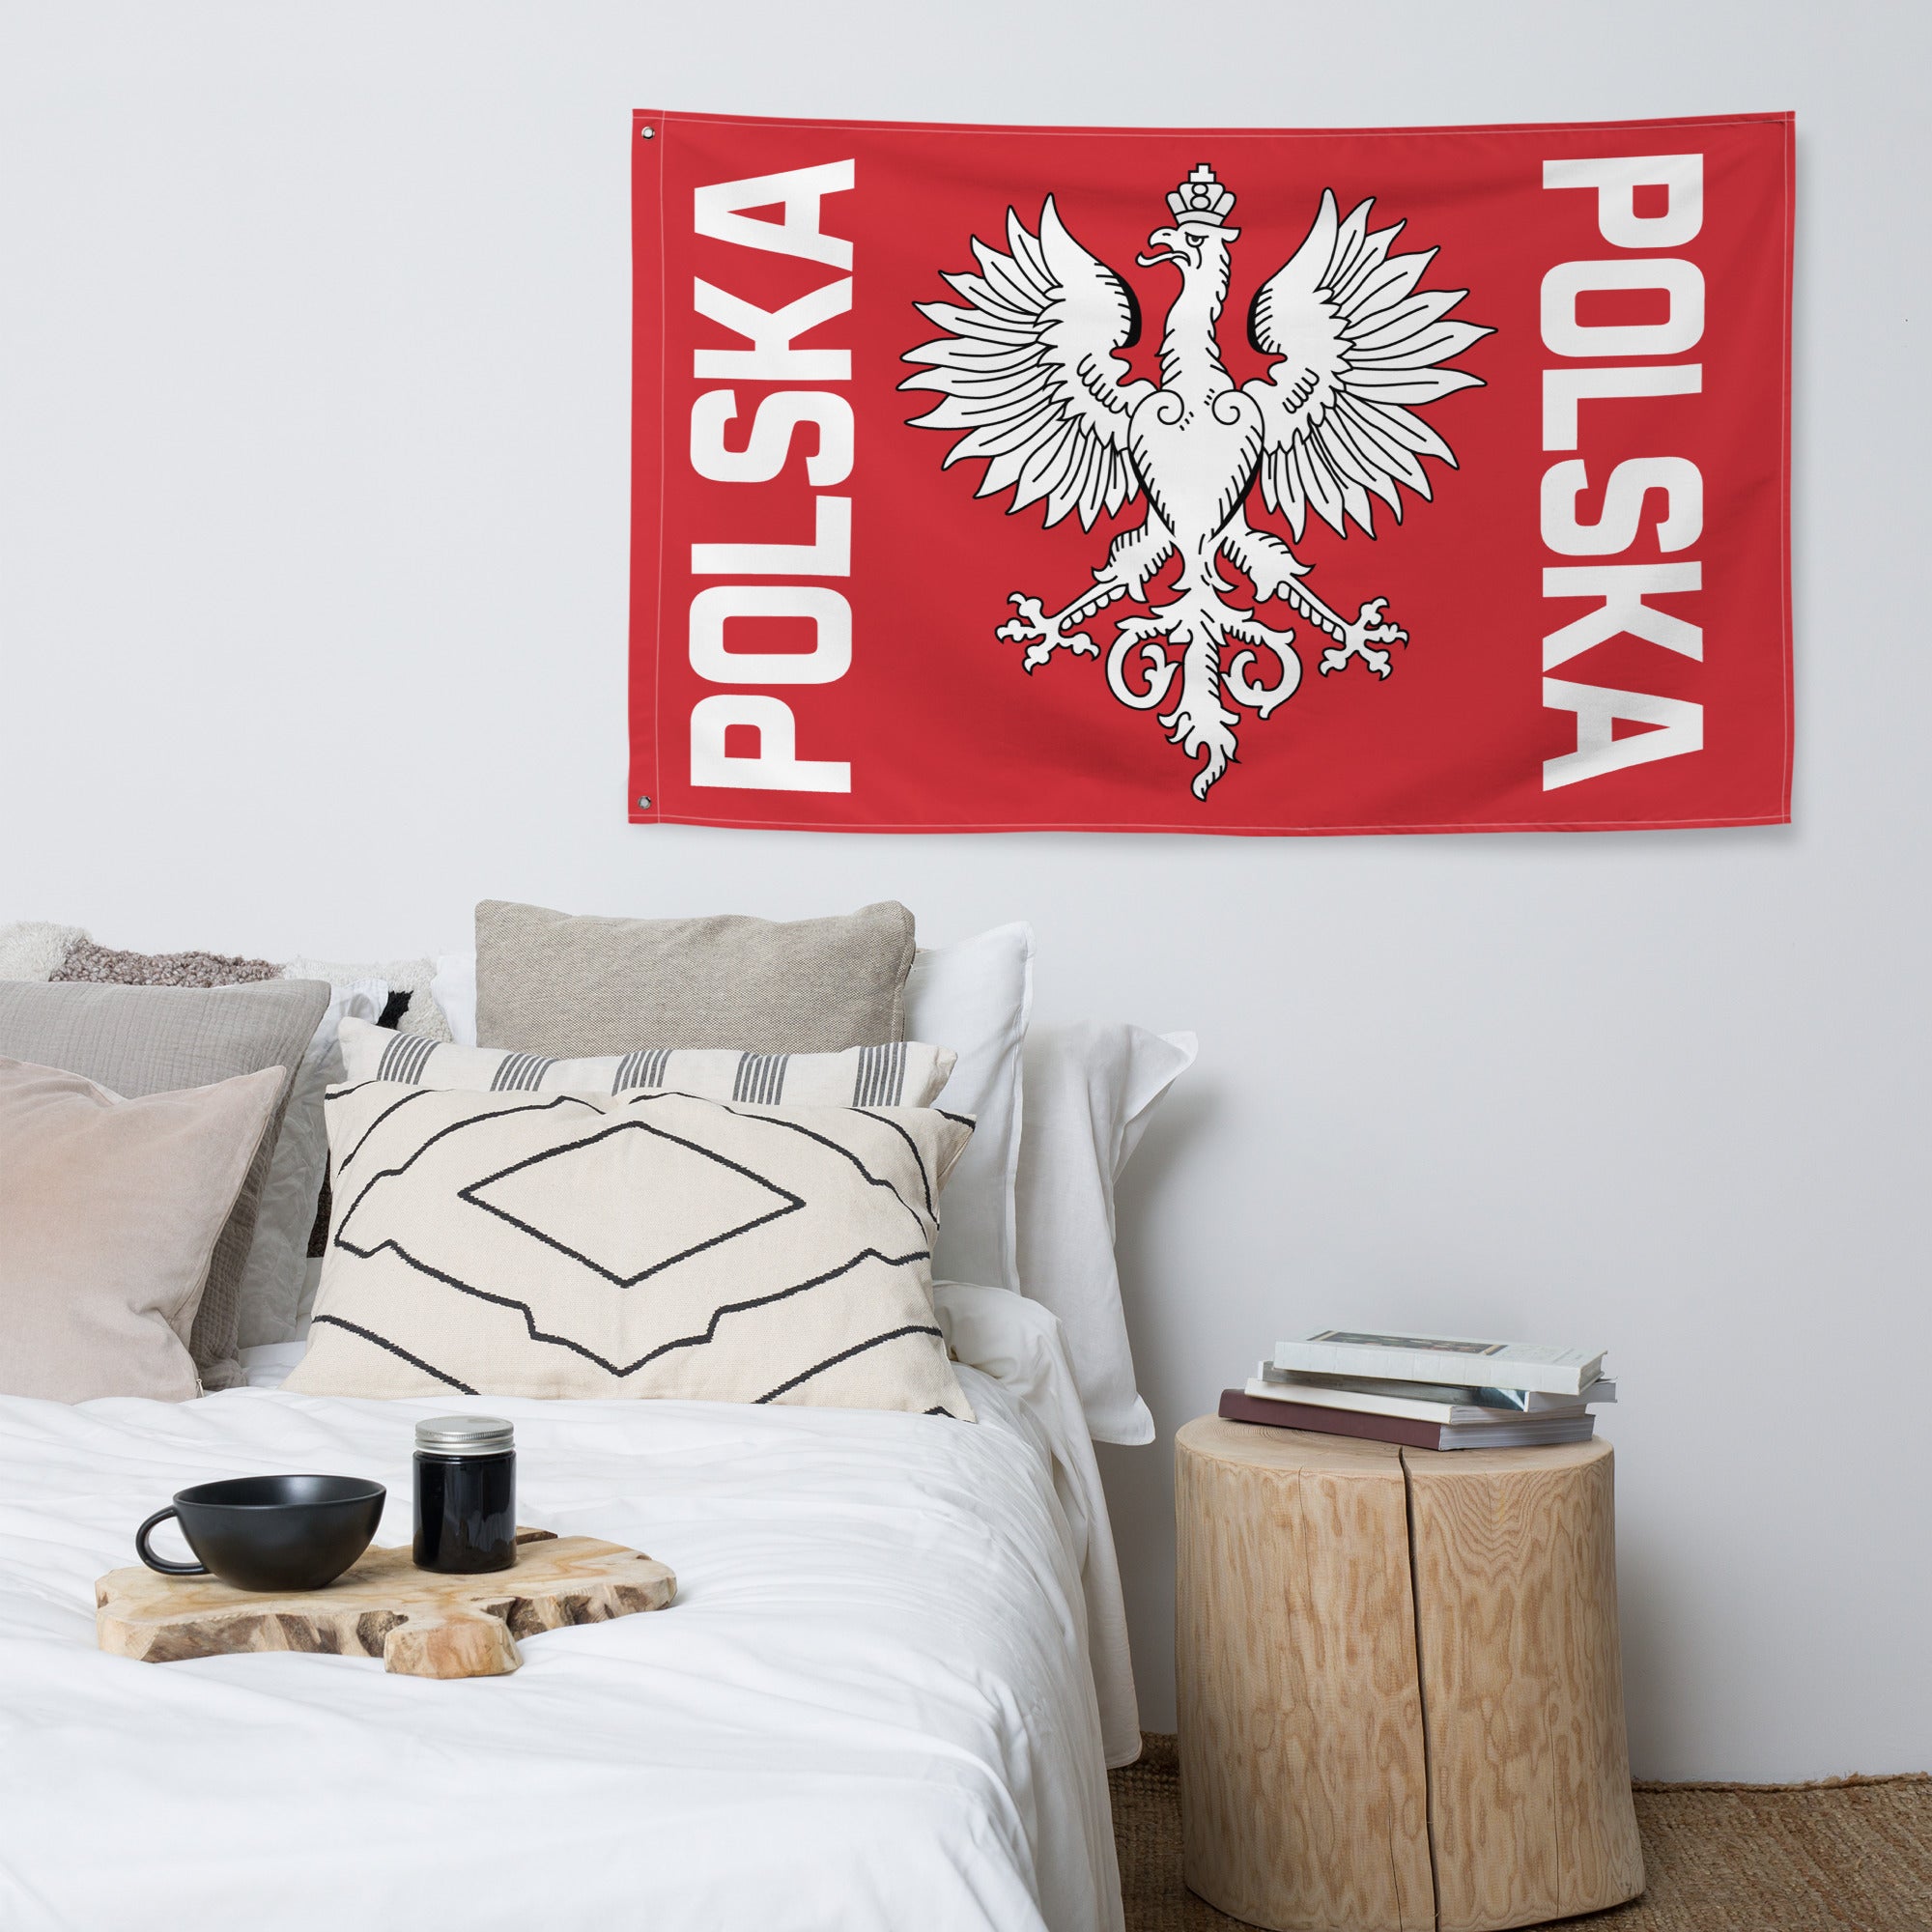 Polska Indoor Wall Flag  Polish Shirt Store   